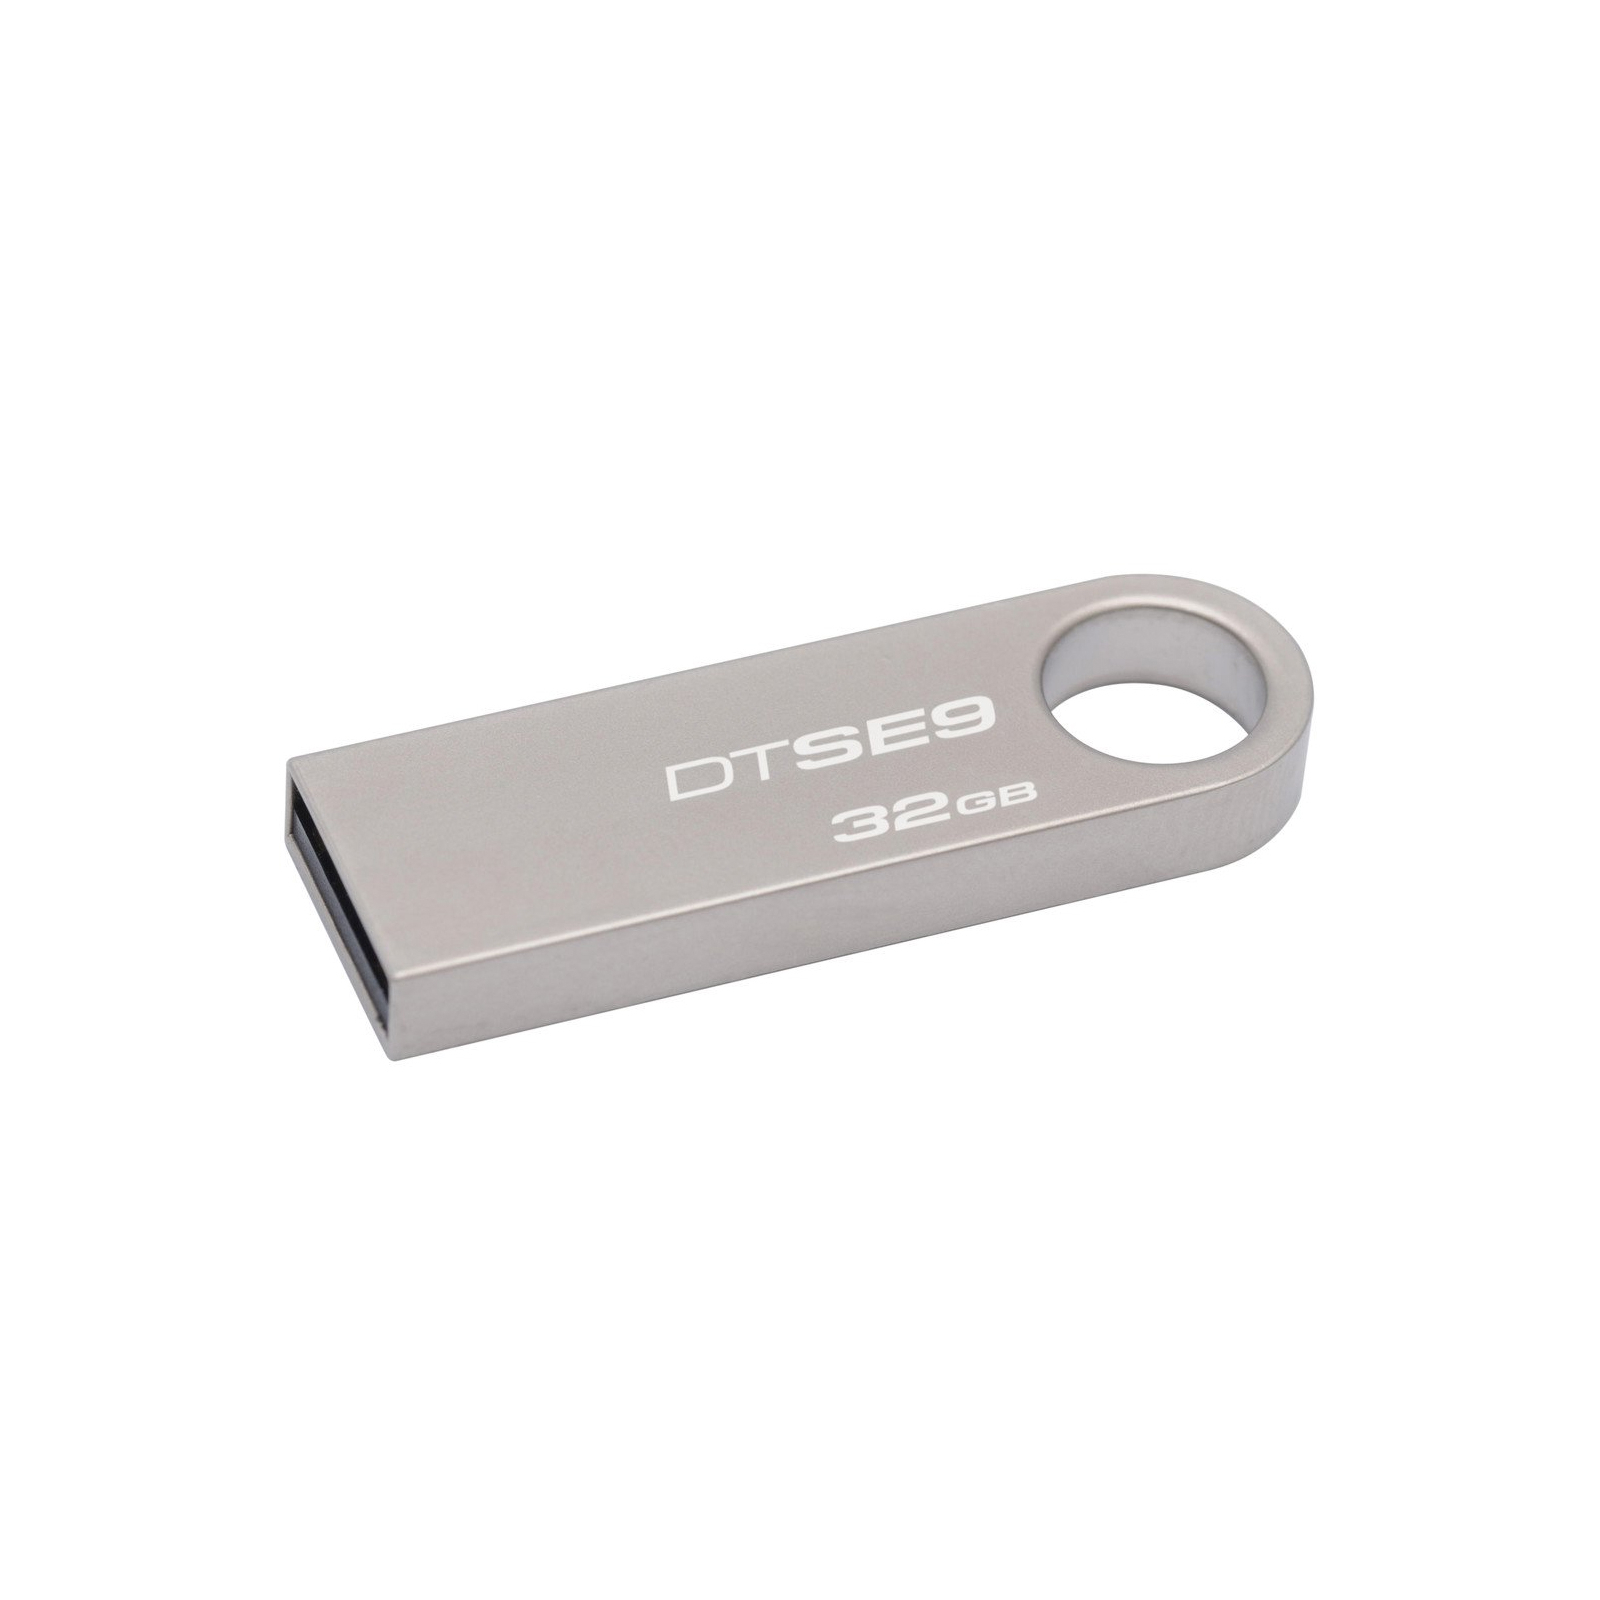 USB флеш накопитель Kingston 32GB DTSE9 Metal USB 2.0 (DTSE9H/32GBZ)